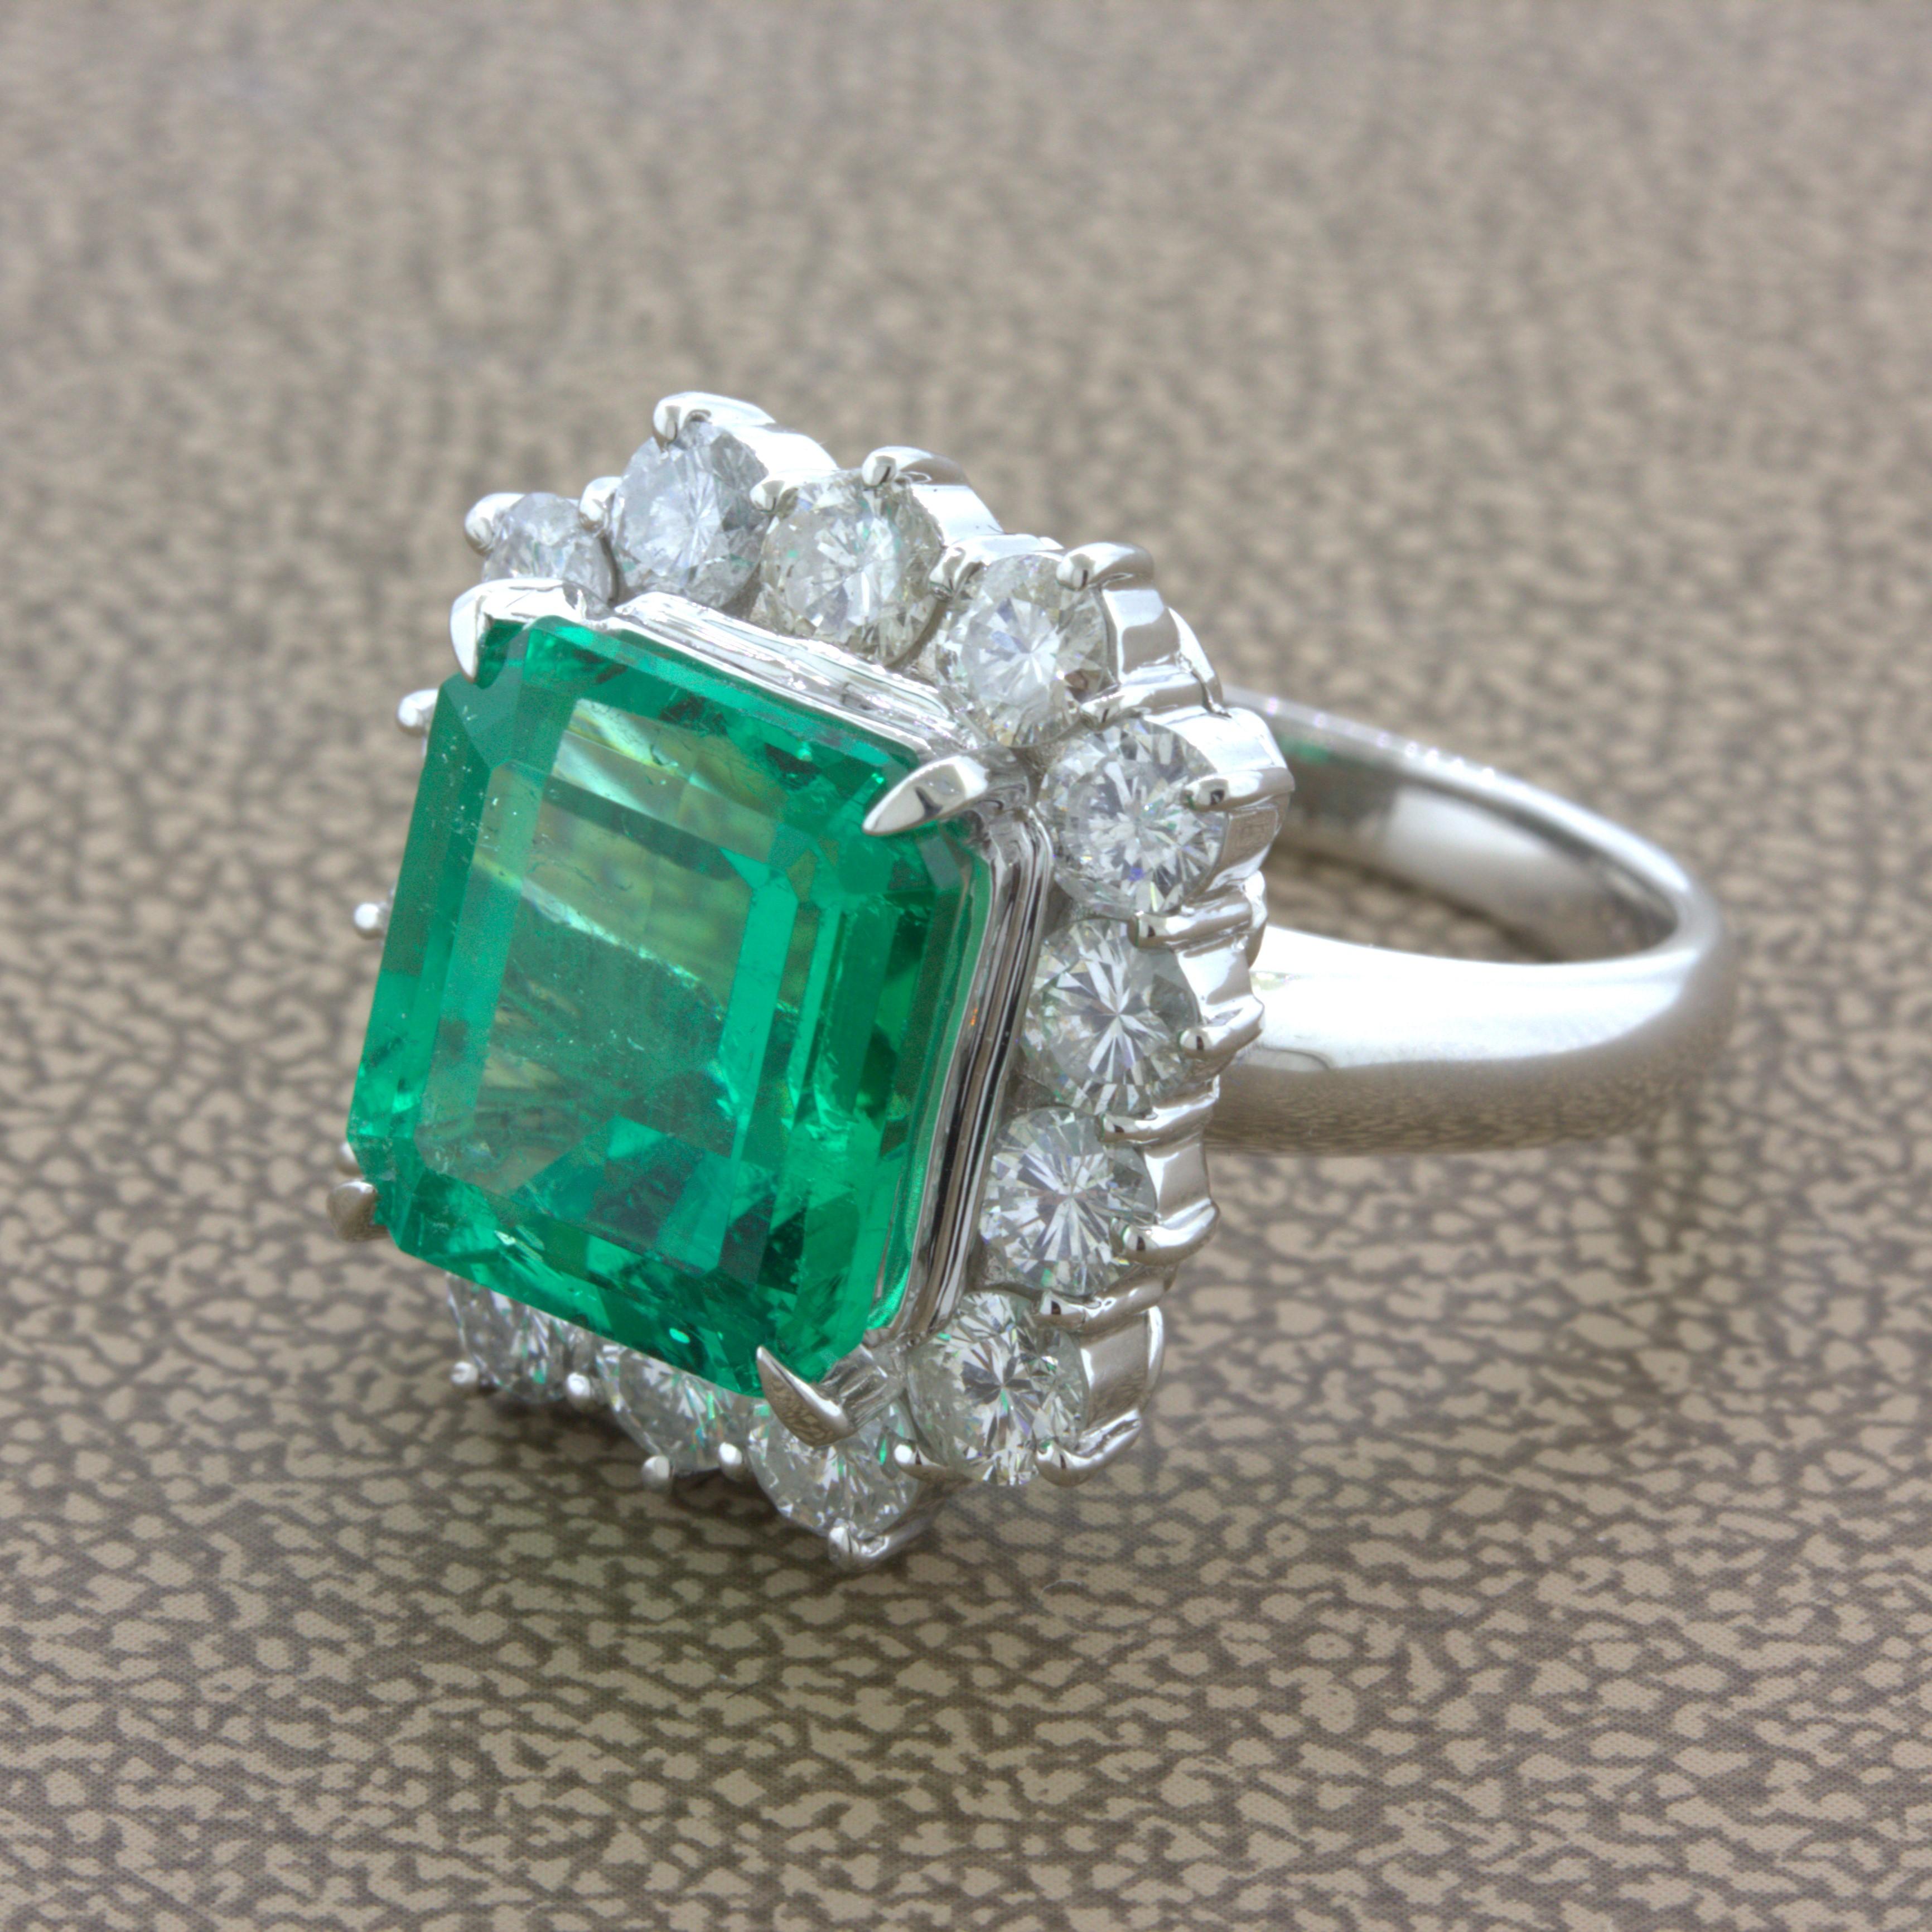 Emerald Cut Superb 6.12 Carat Colombian Emerald Diamond Platinum Ring, GIA Certified